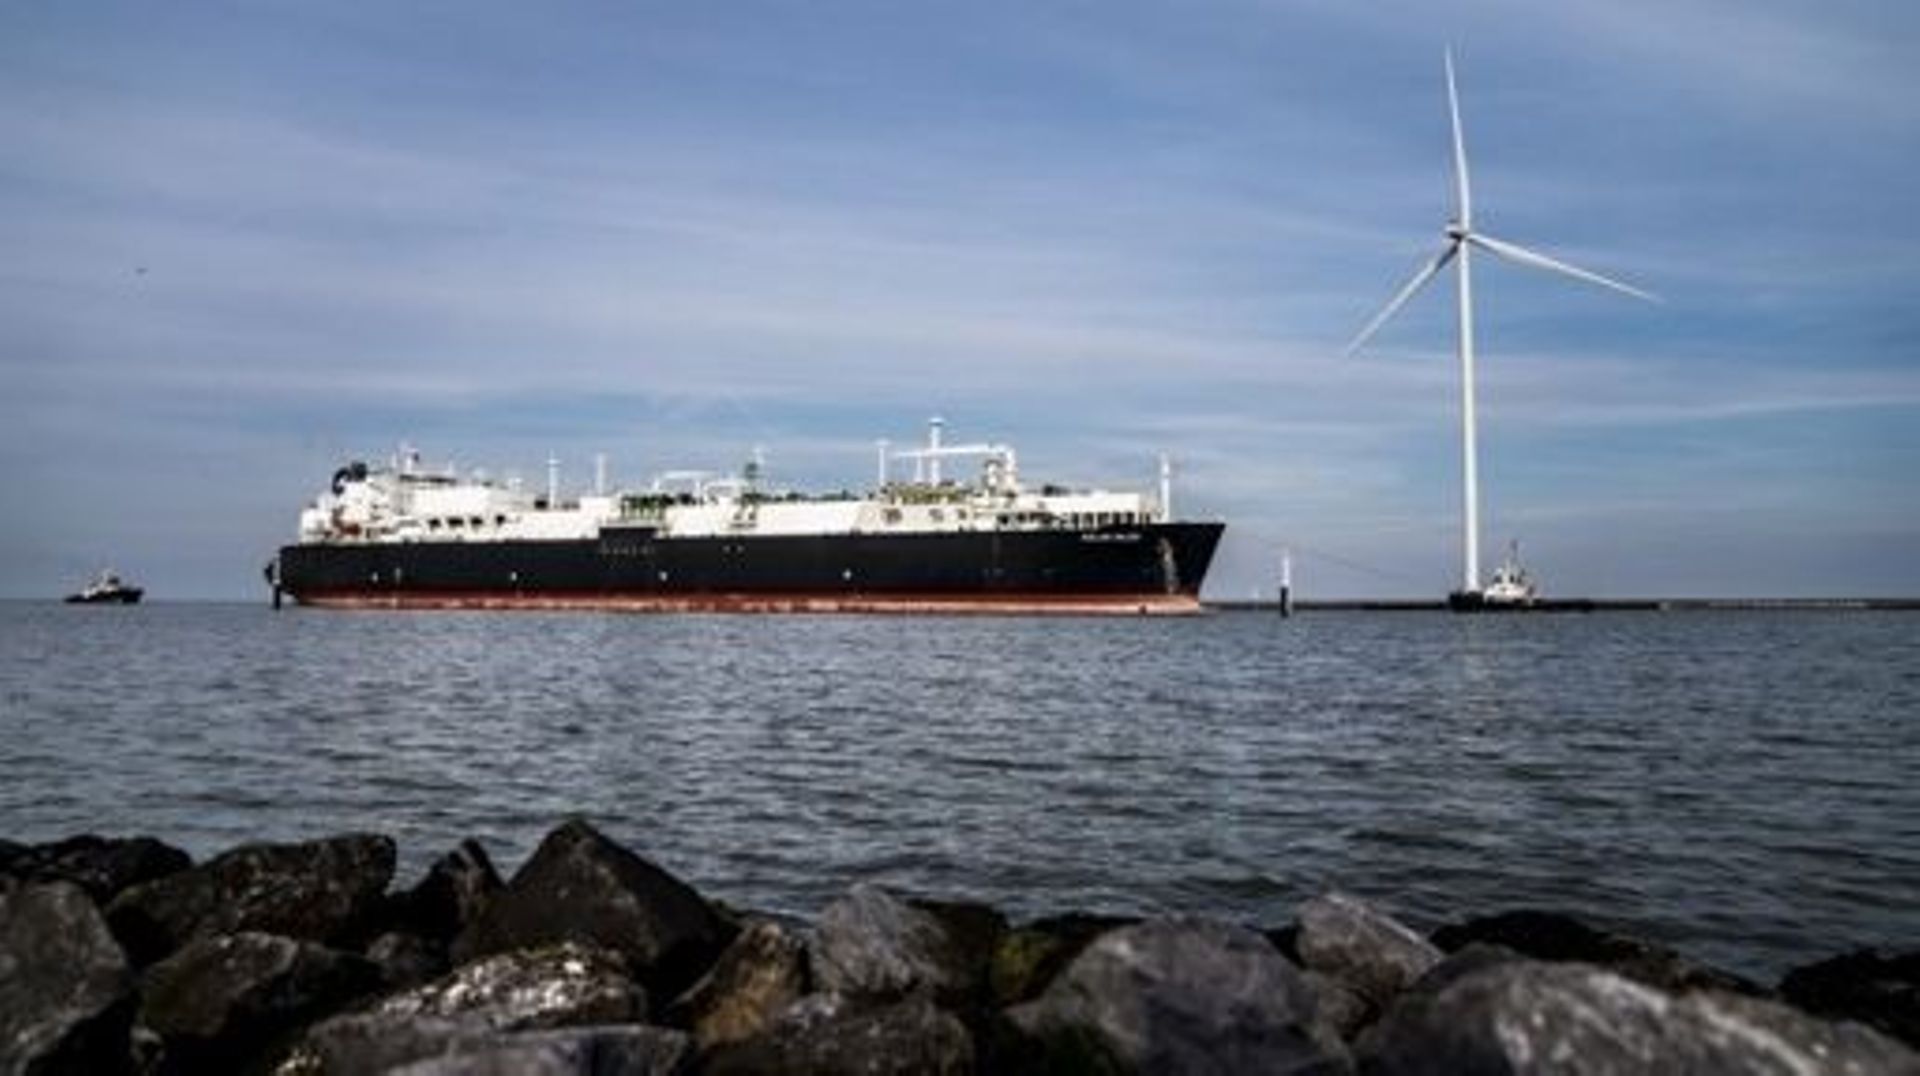 LNG (liquefied natural gas) tanker 'Golar Igloo' arrives in the port of Eemshaven, north of Groningen, on September 4, 2022.  Siese VEENSTRA / ANP / AFP